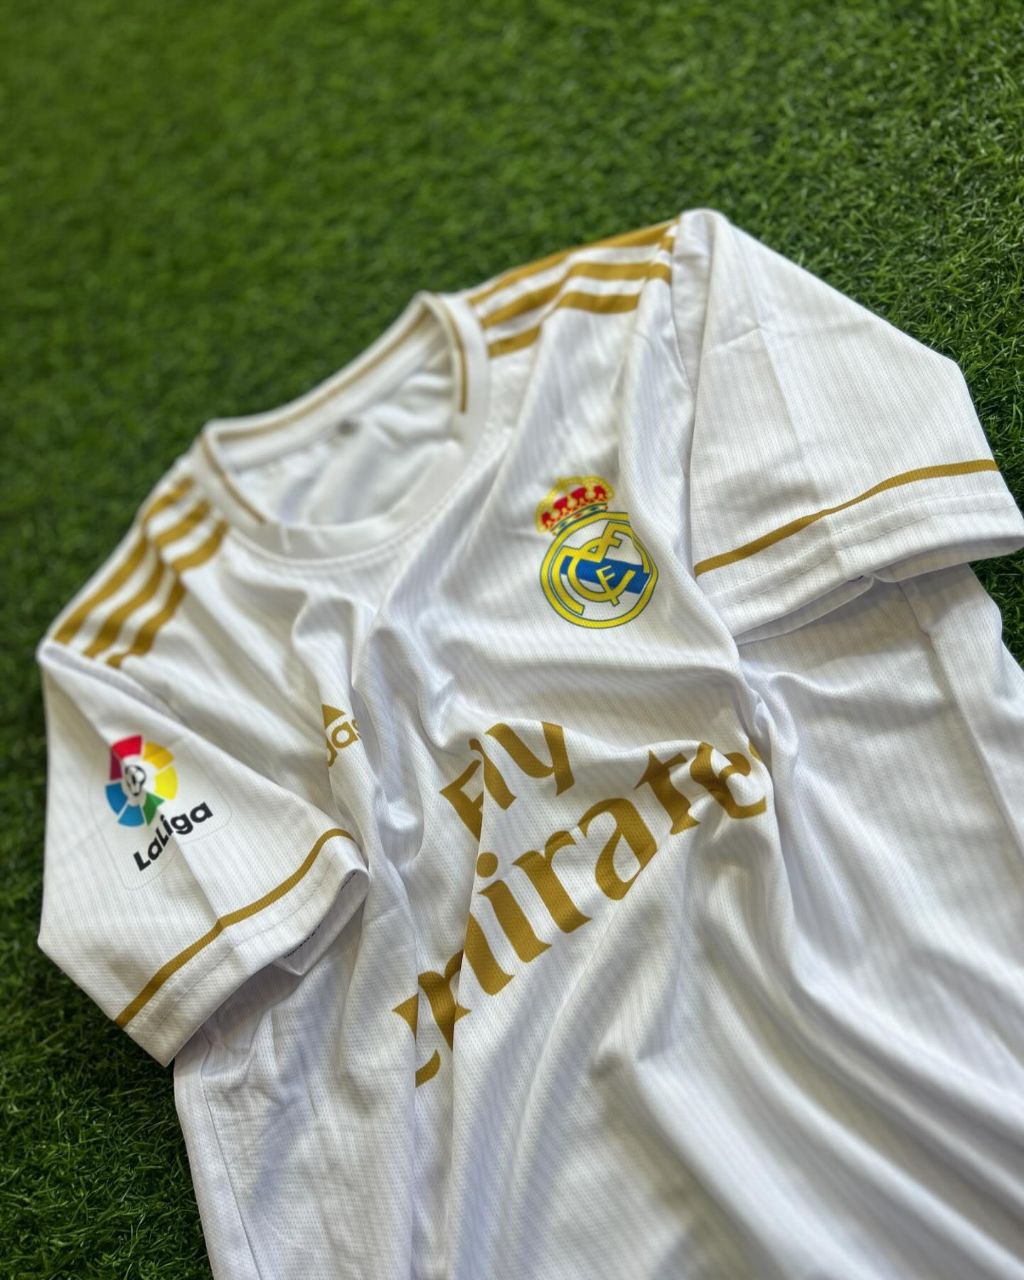 Luka Modric Real Madrid Retro Jersey